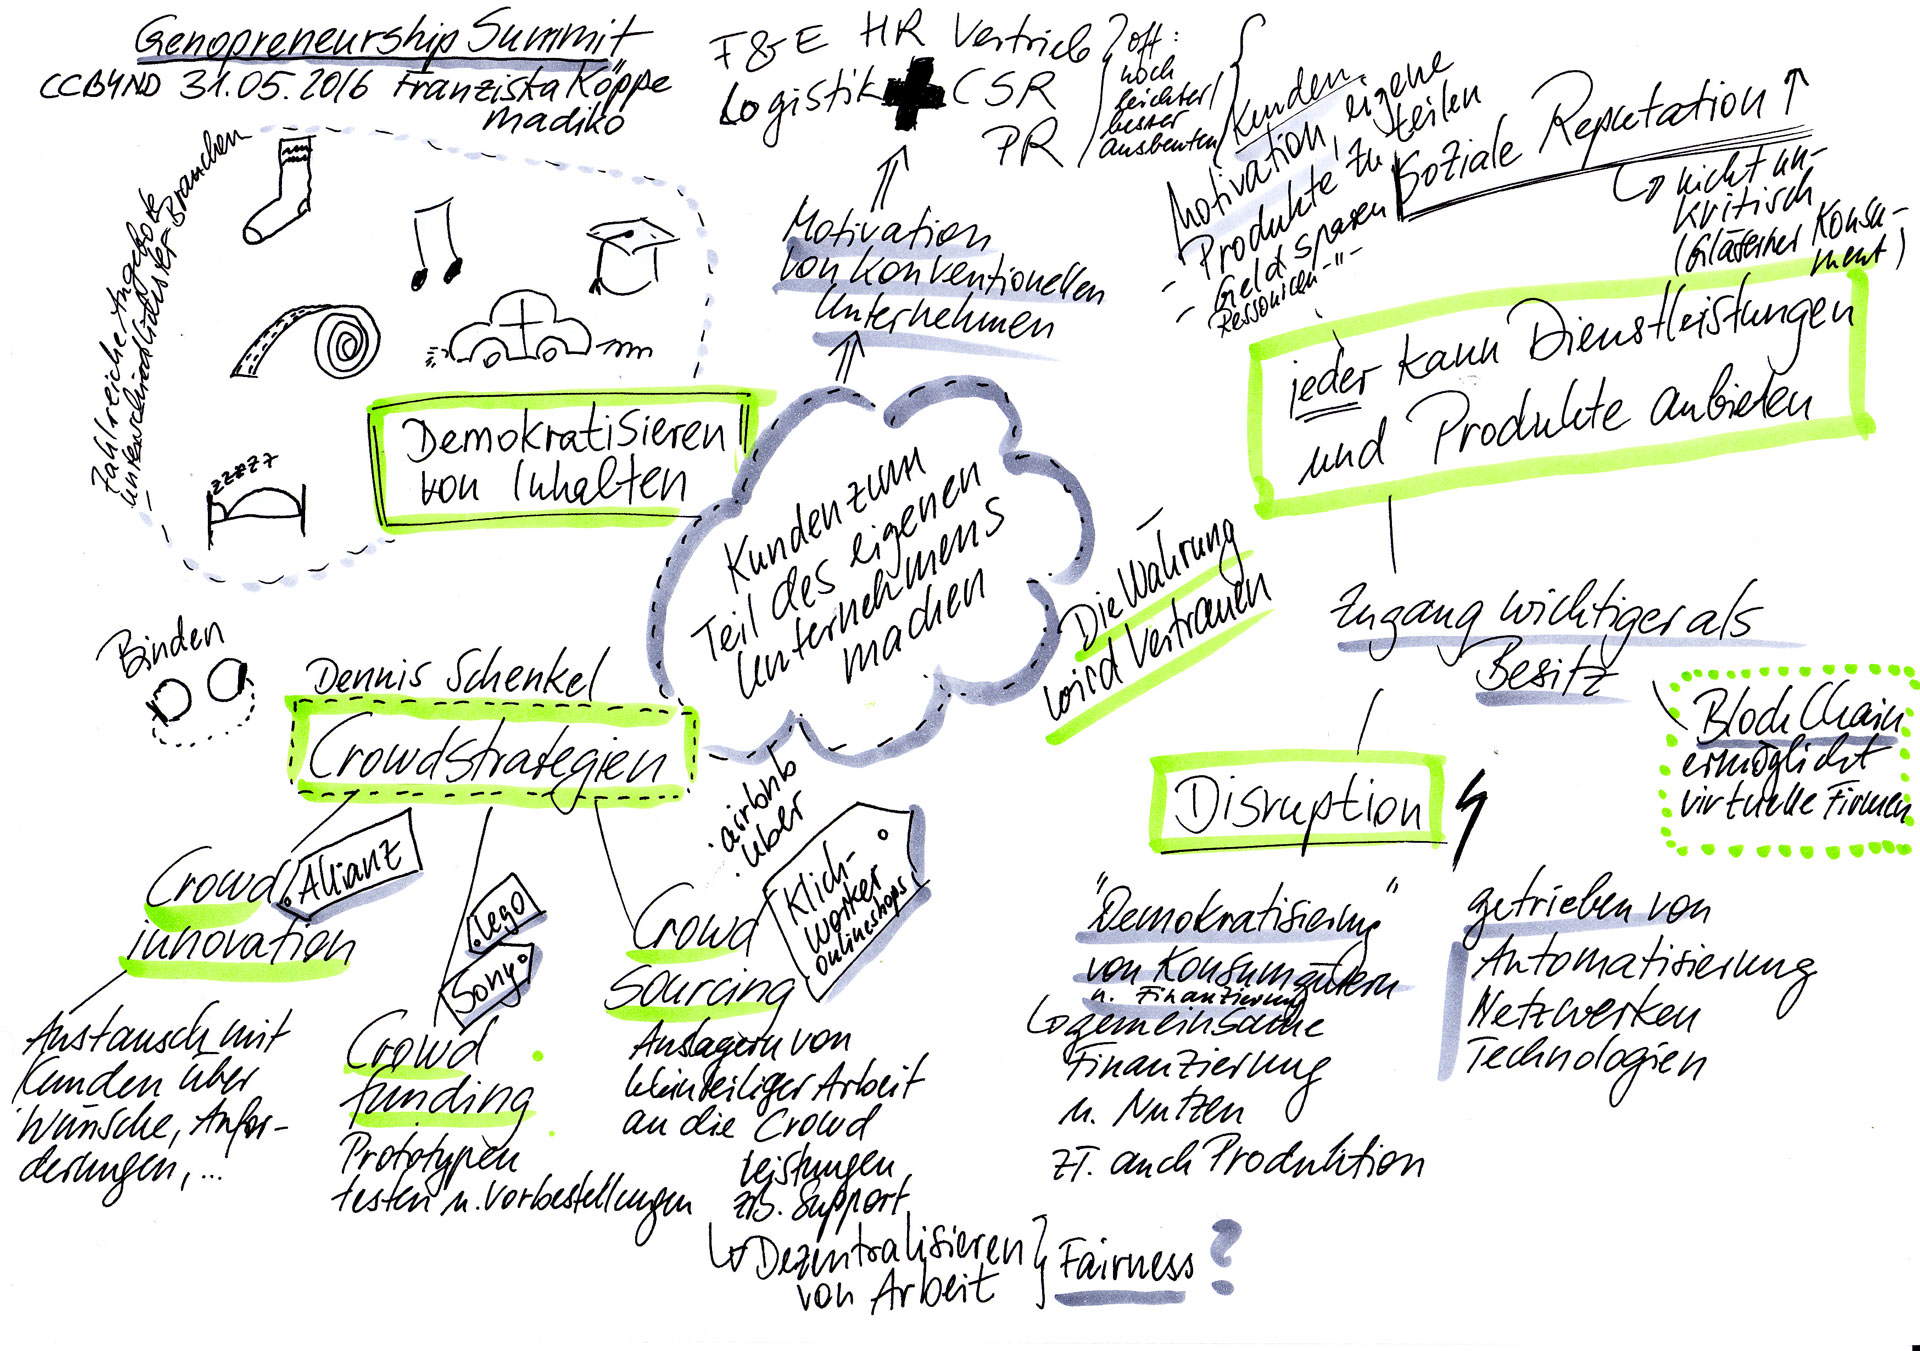 Crowd Economy mit Crowd-Innovation, Crowd-Funding und Crowd-Sourcing <br>Sketchnotes Genopreneurship Summit 2016. Bild: cc Franziska Köppe | madiko sketchnotes